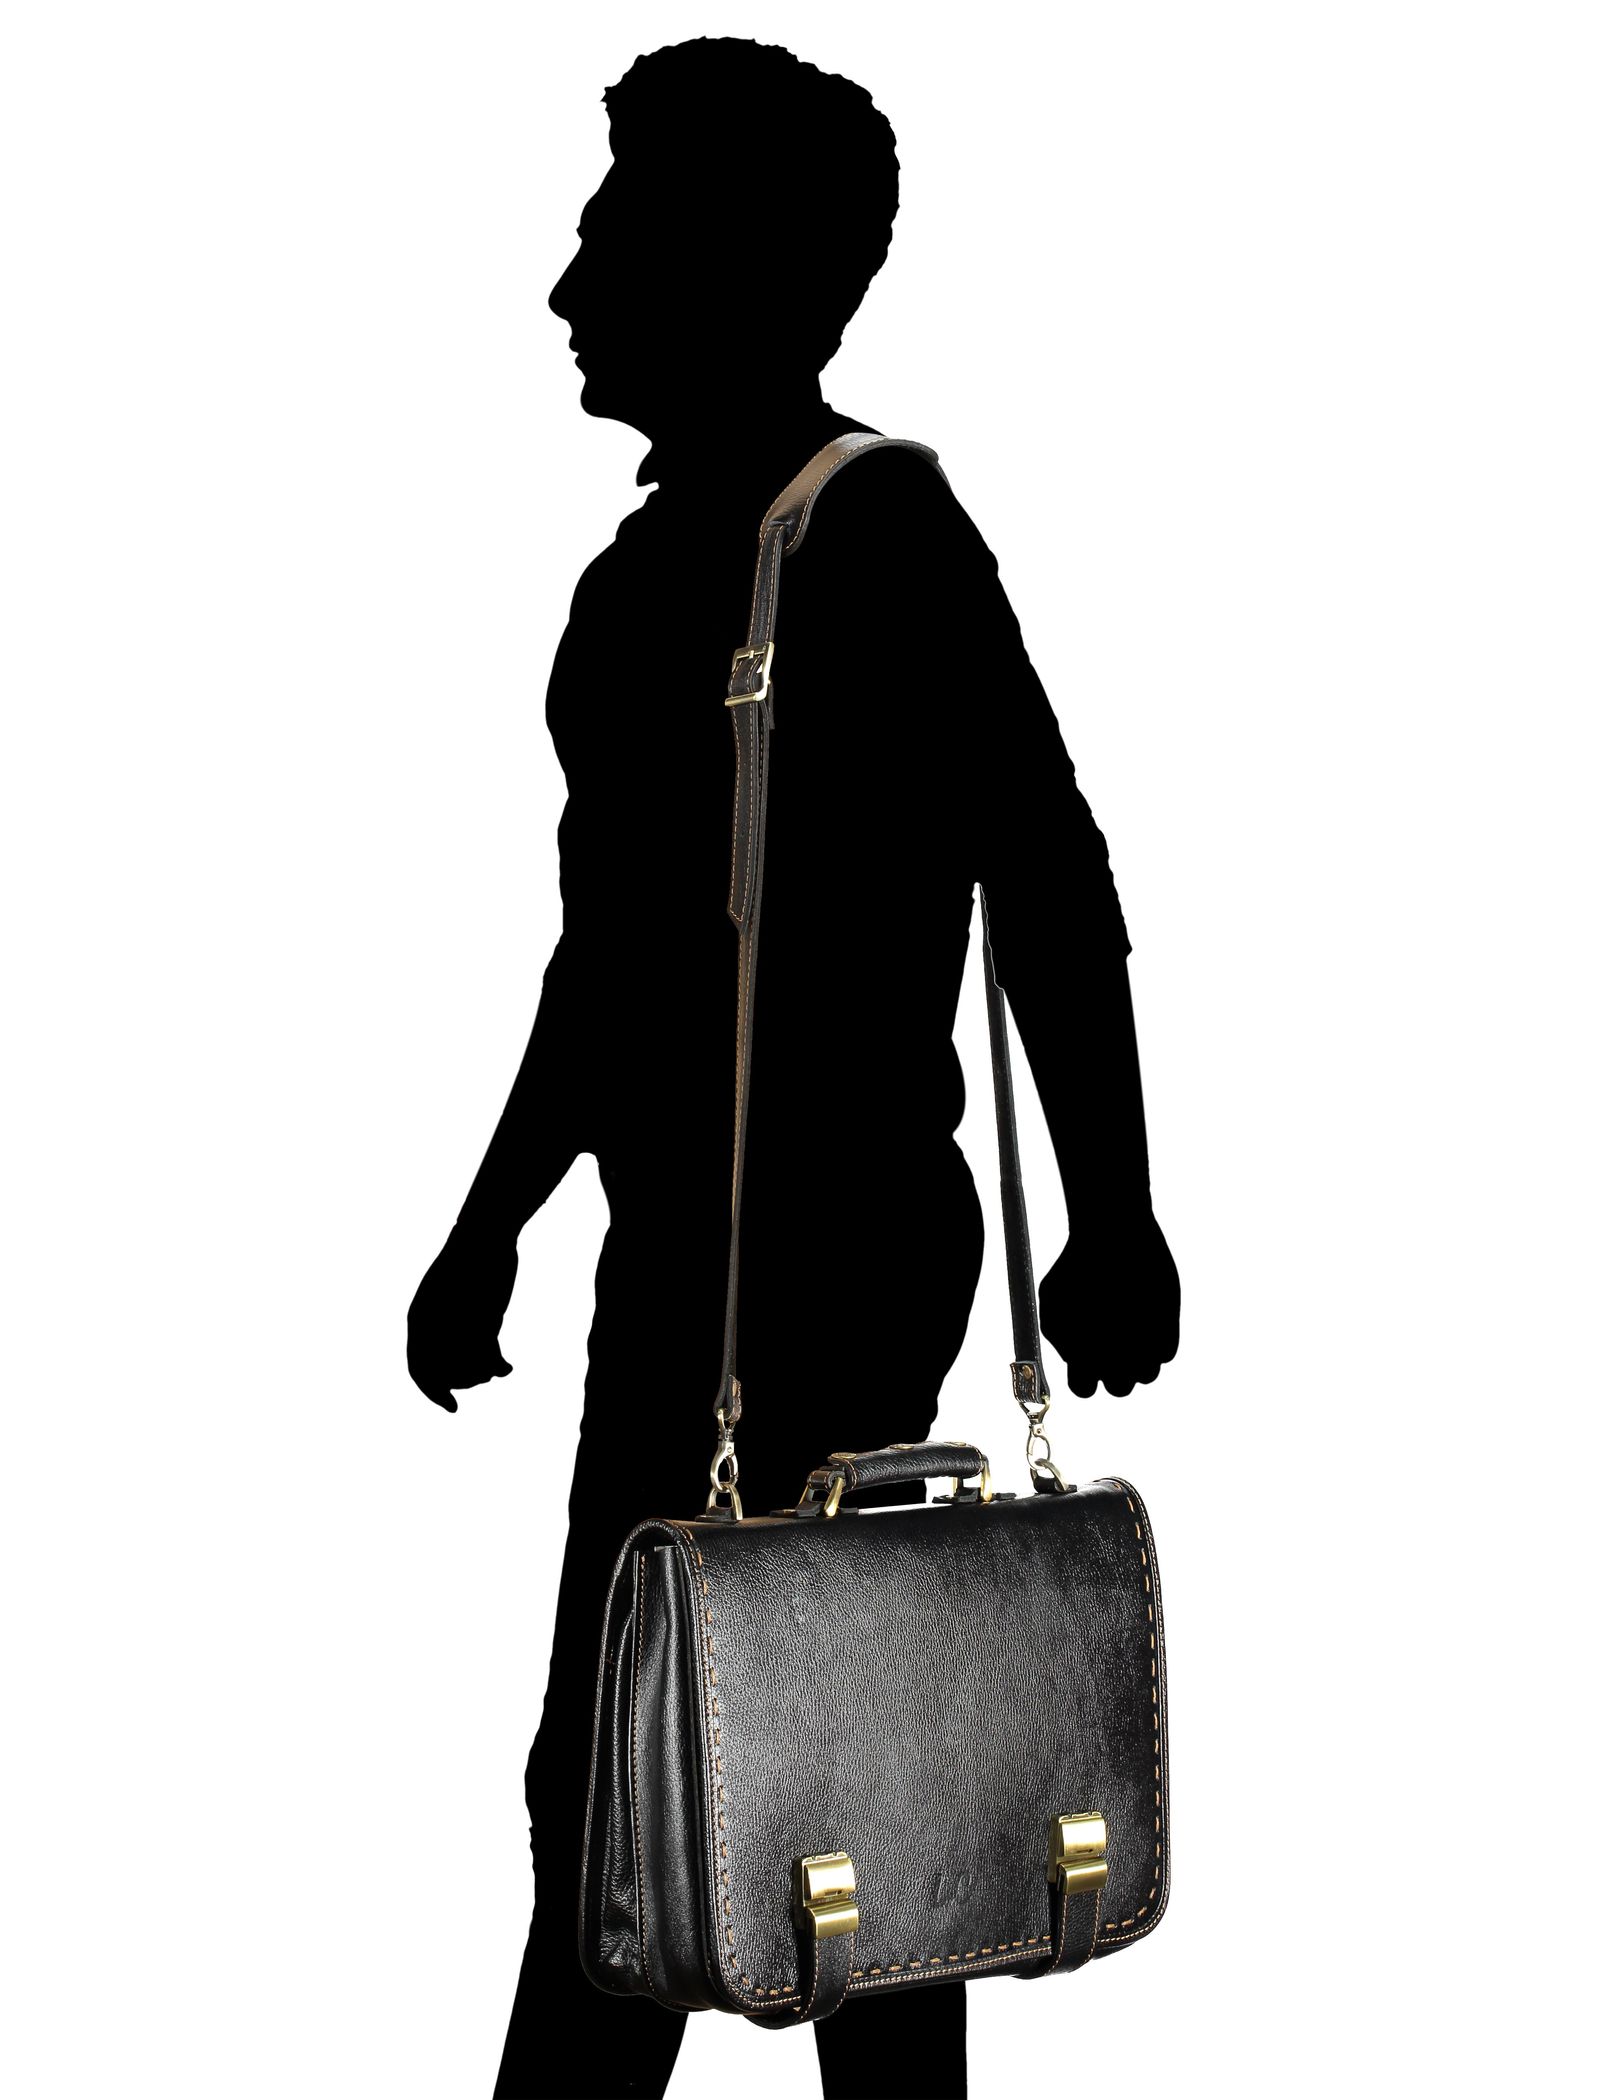 کیف دستی چرم مردانه - شهر چرم تک سایز - مشکي - 8